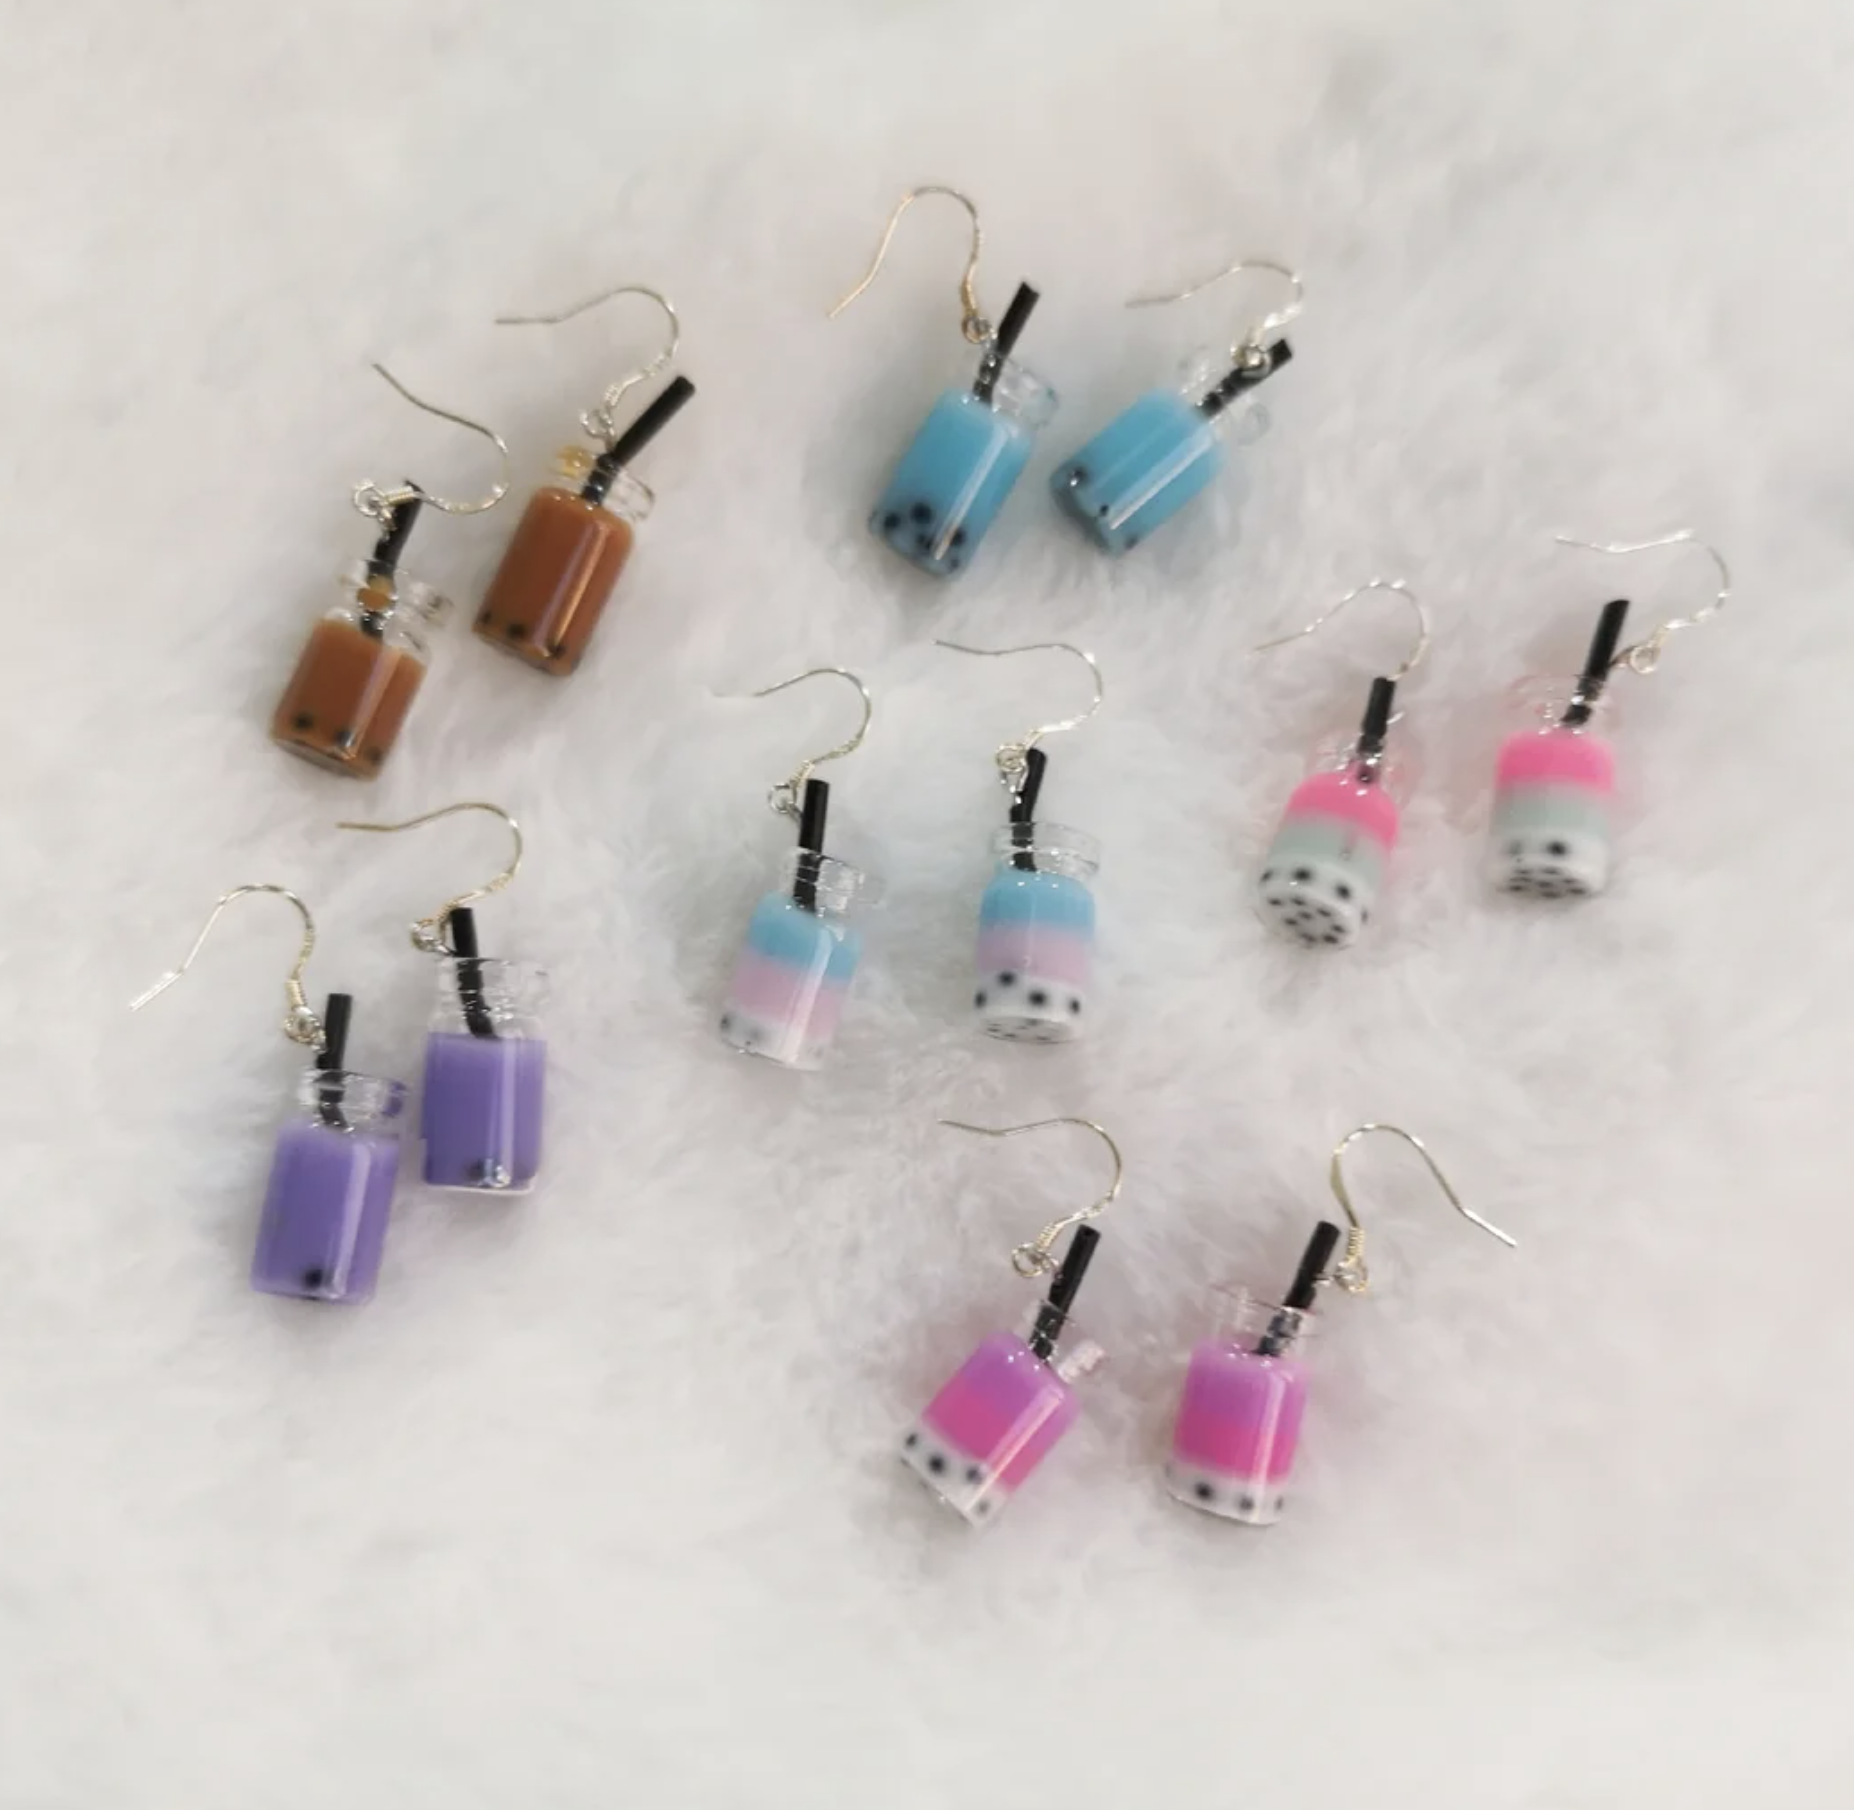 The earrings in various colors